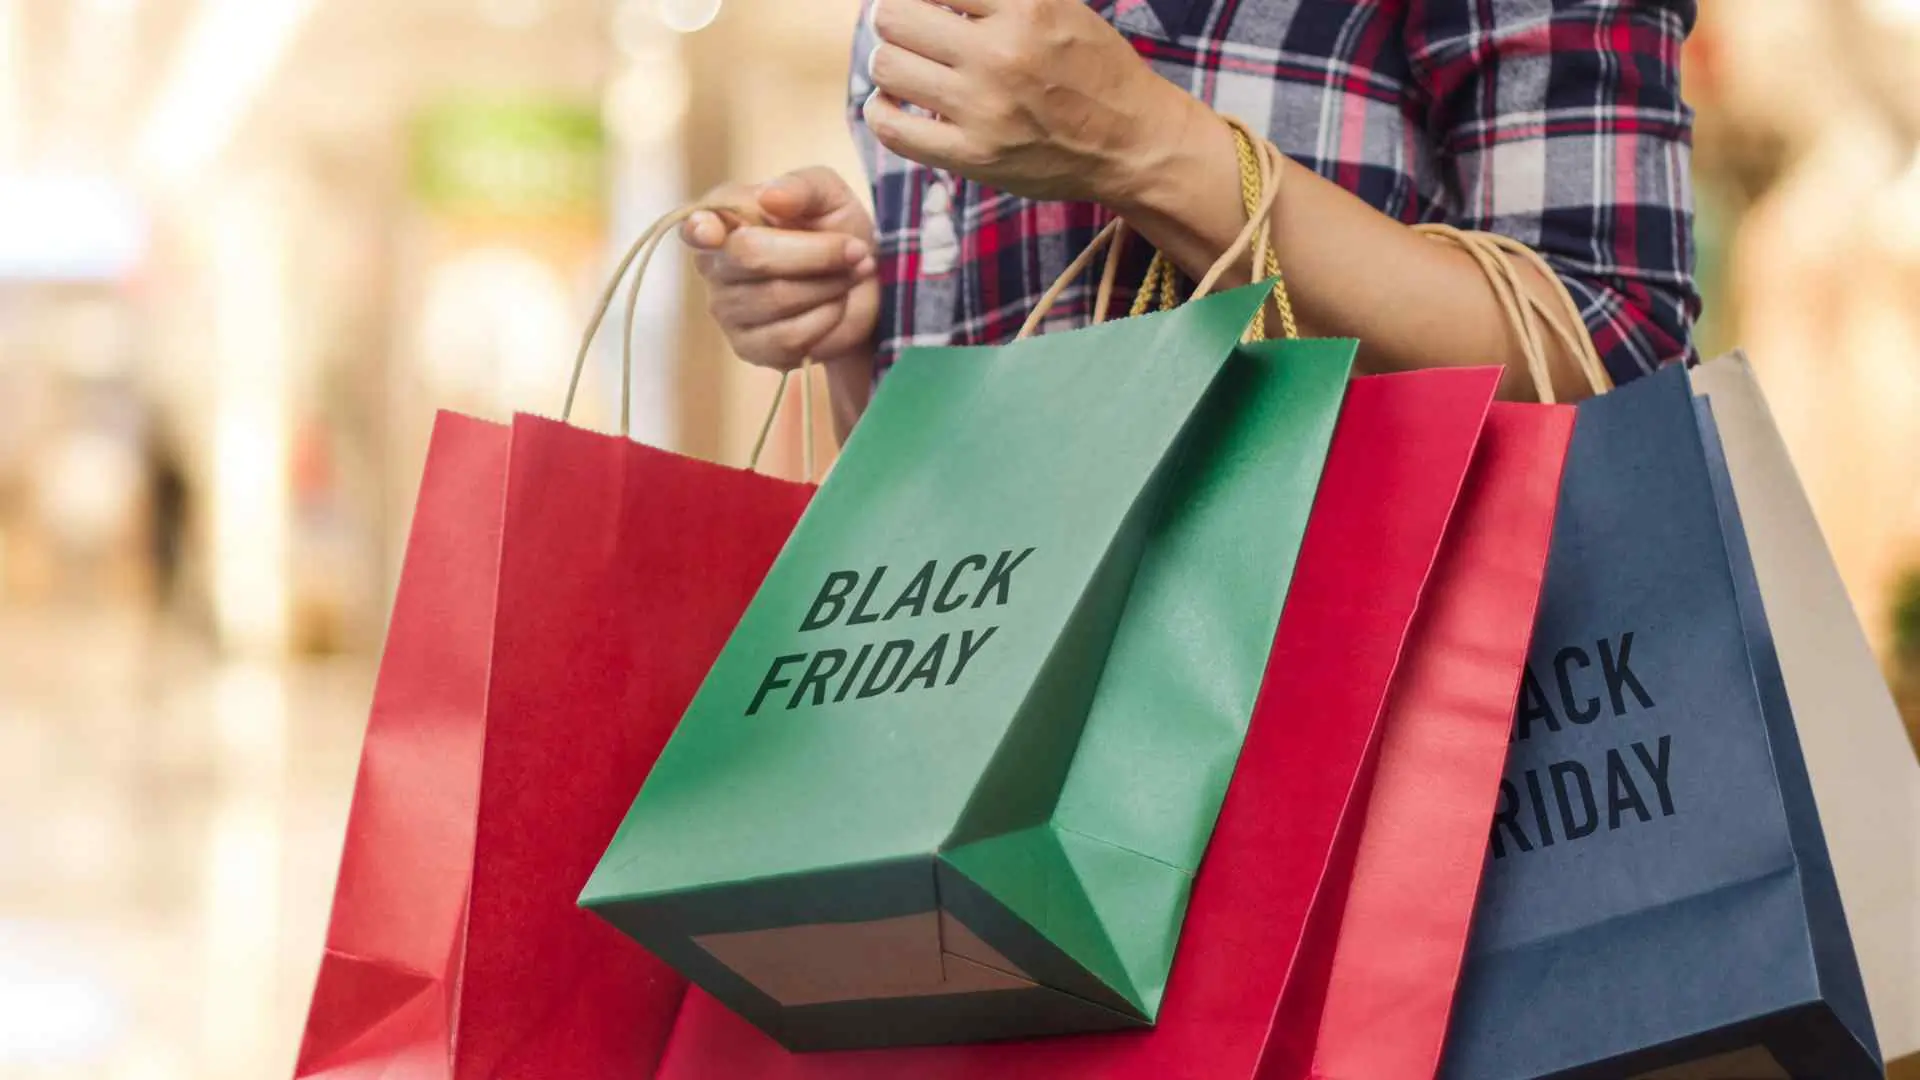 Black Friday Responsible Shopping Tips - Debtline